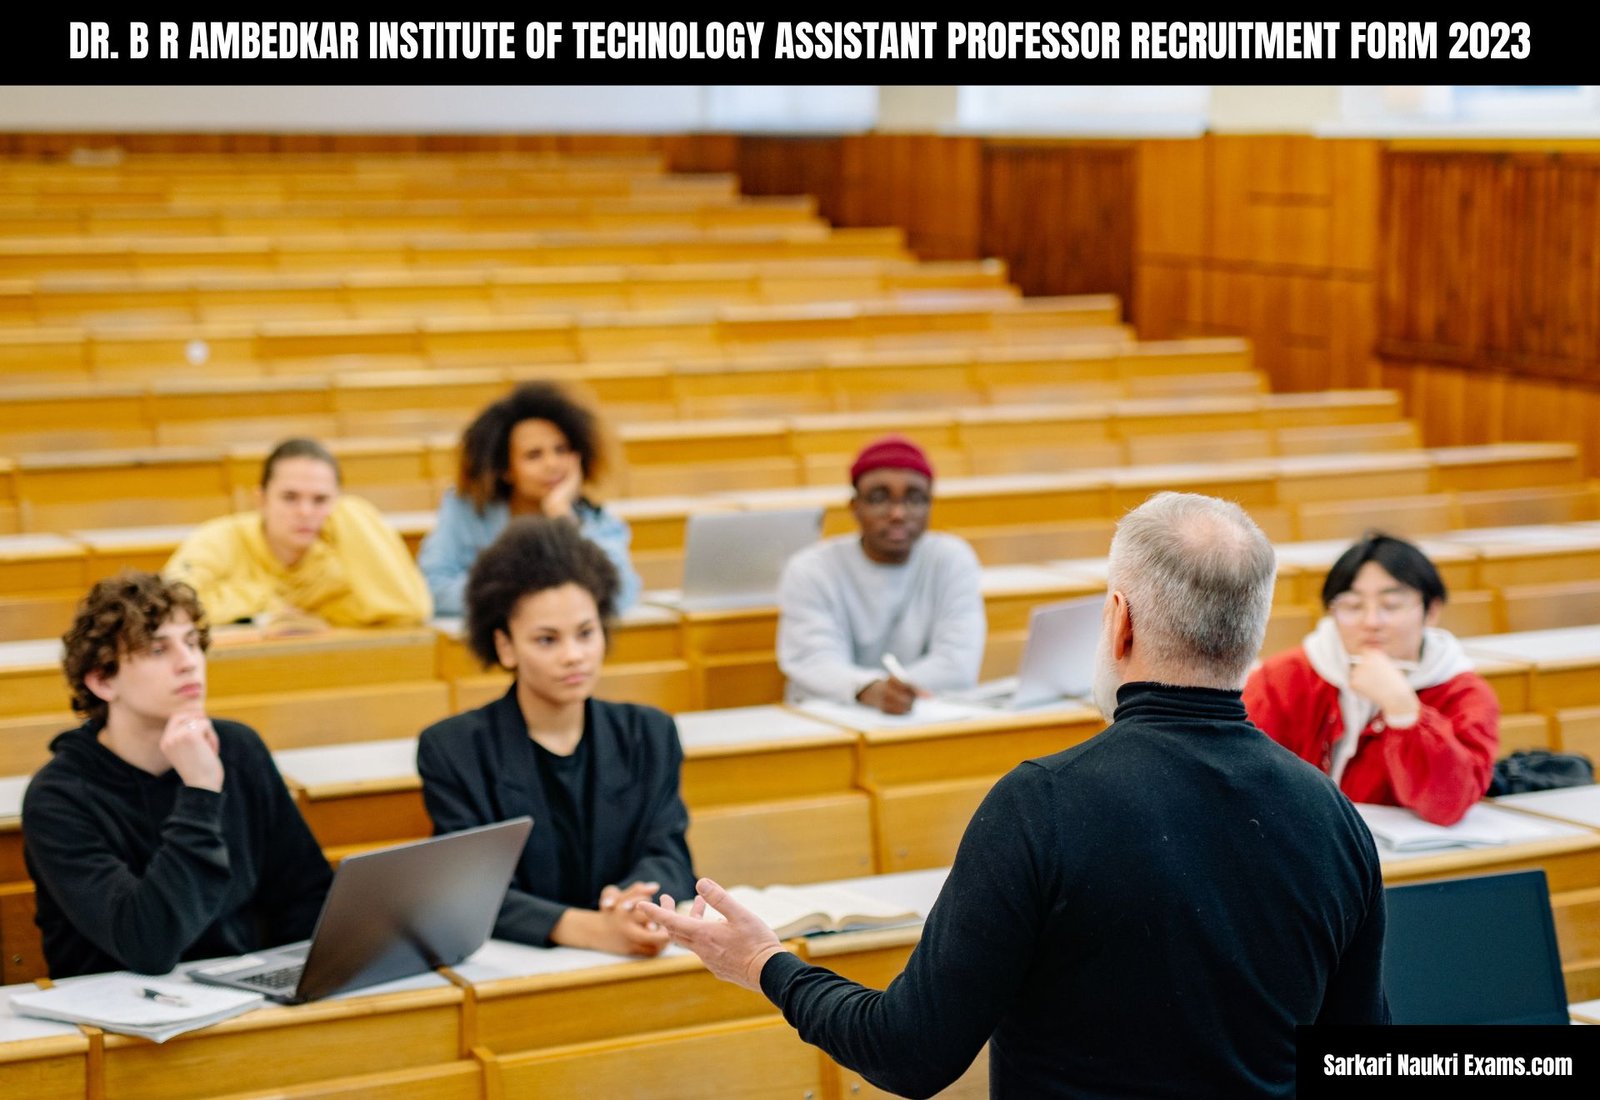 Dr. B R Ambedkar Institute of Technology Assistant Professor Recruitment Form 2023